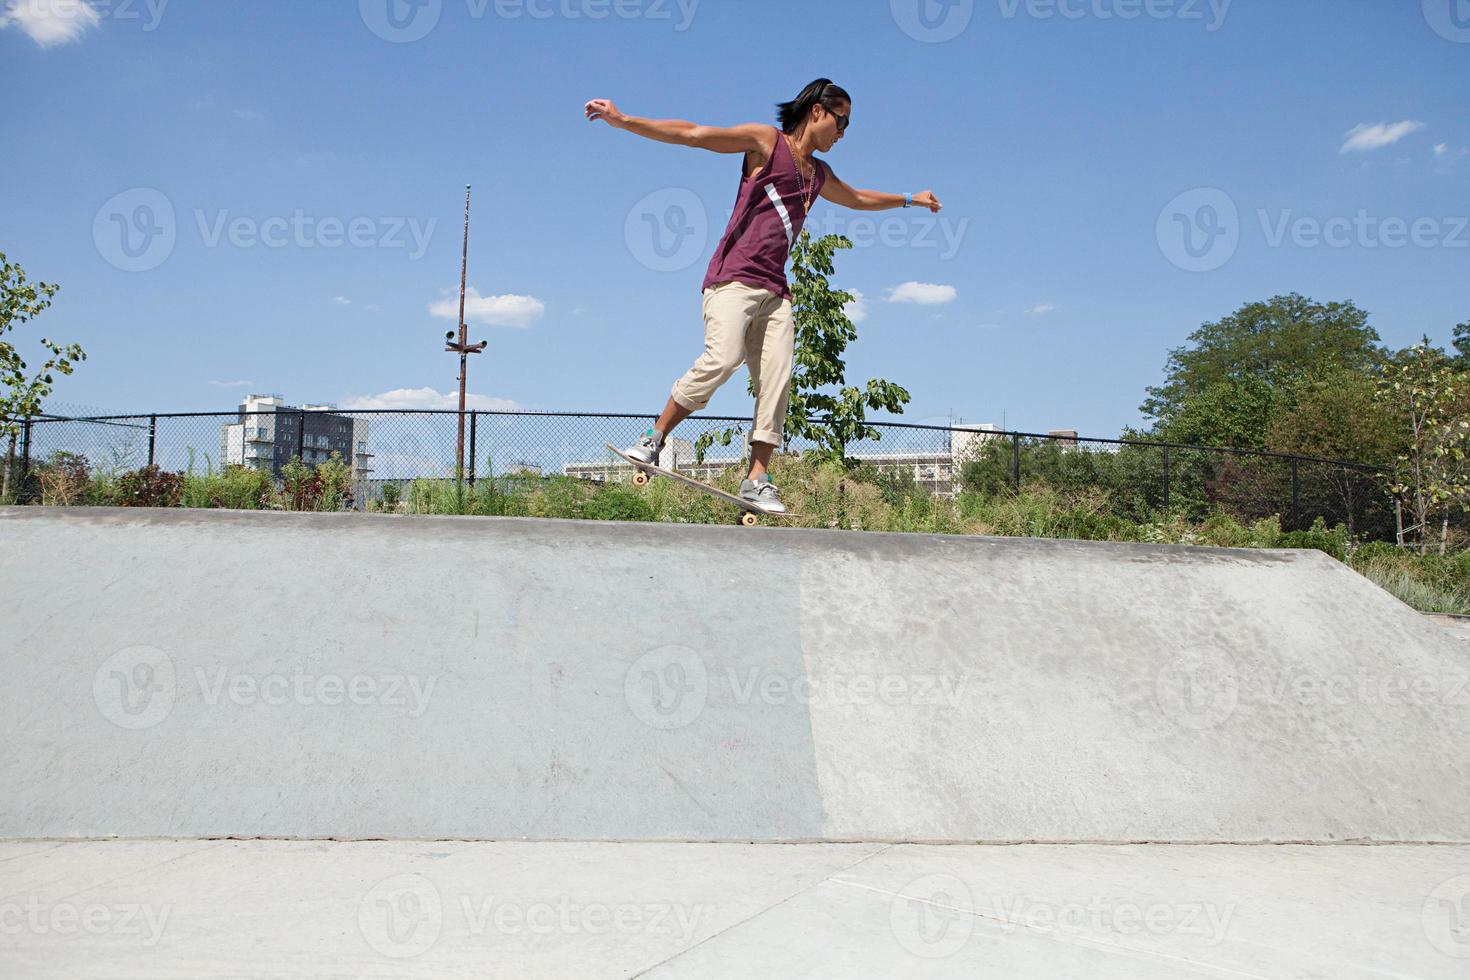 skateboarder op oprit bij skatepark foto